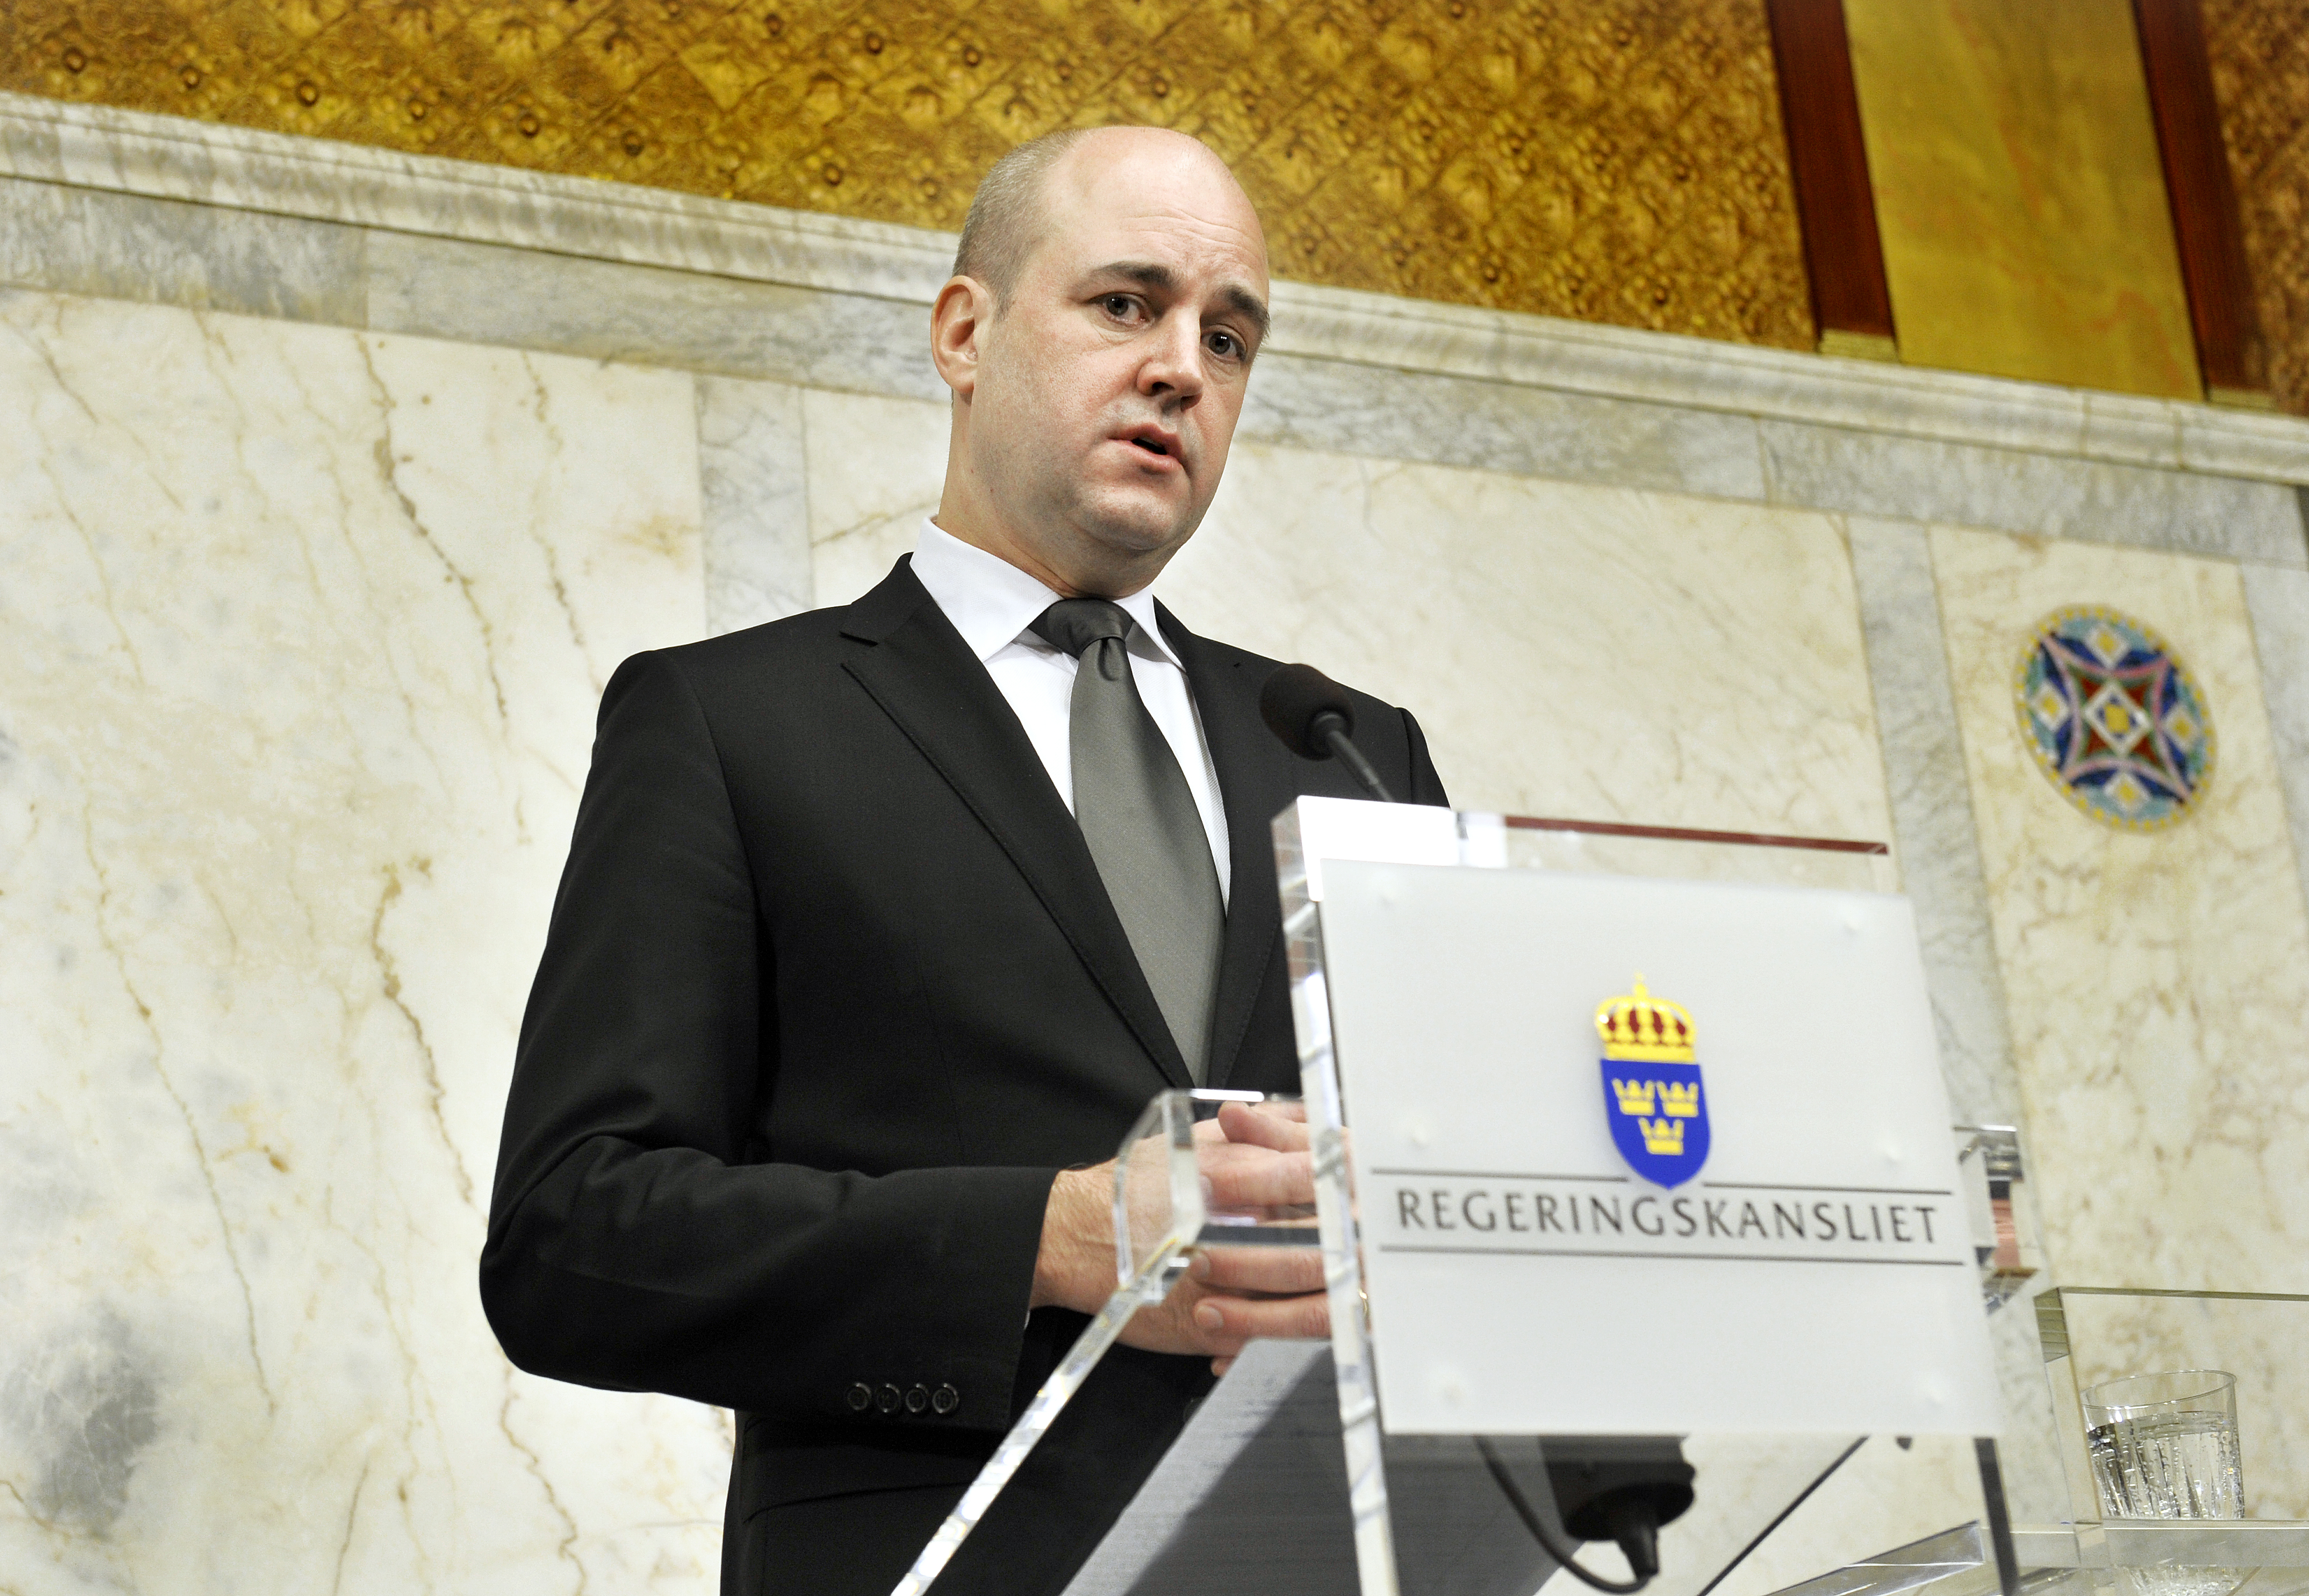 A-kassa, Fredrik Reinfeldt, Moderaterna